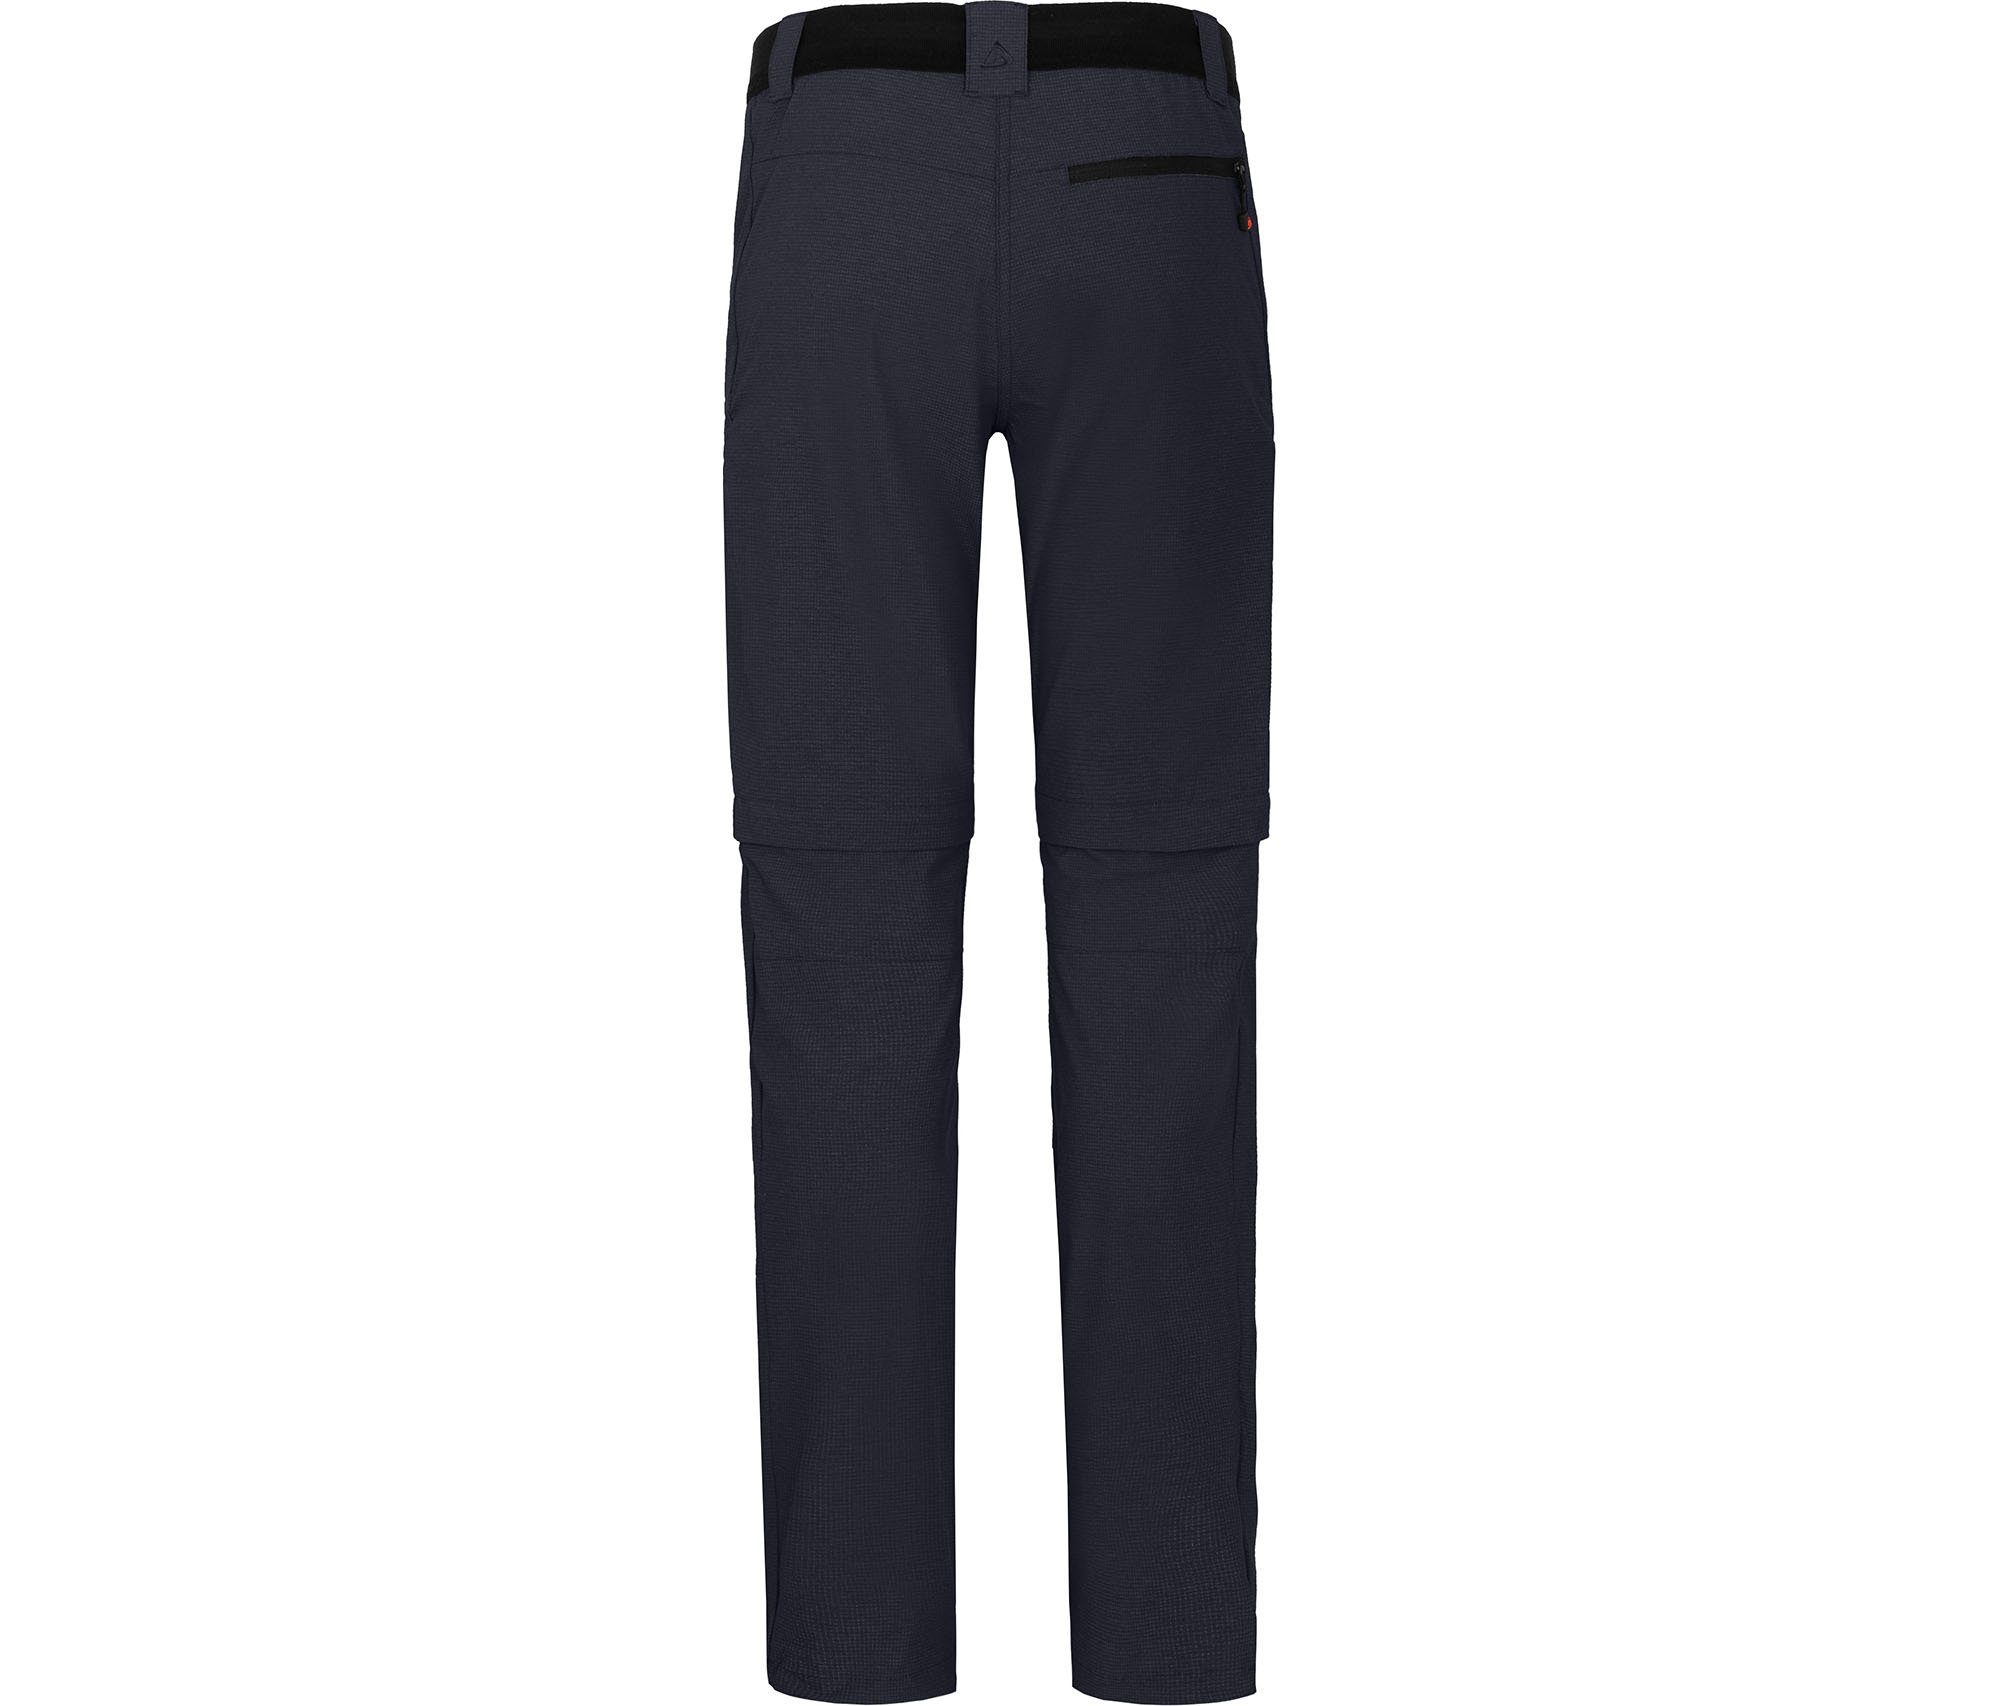 Zip-off-Hose Wanderhose, Damen Normalgrößen, PORI blau Bergson Zipp-Off robust, elastisch, Nacht